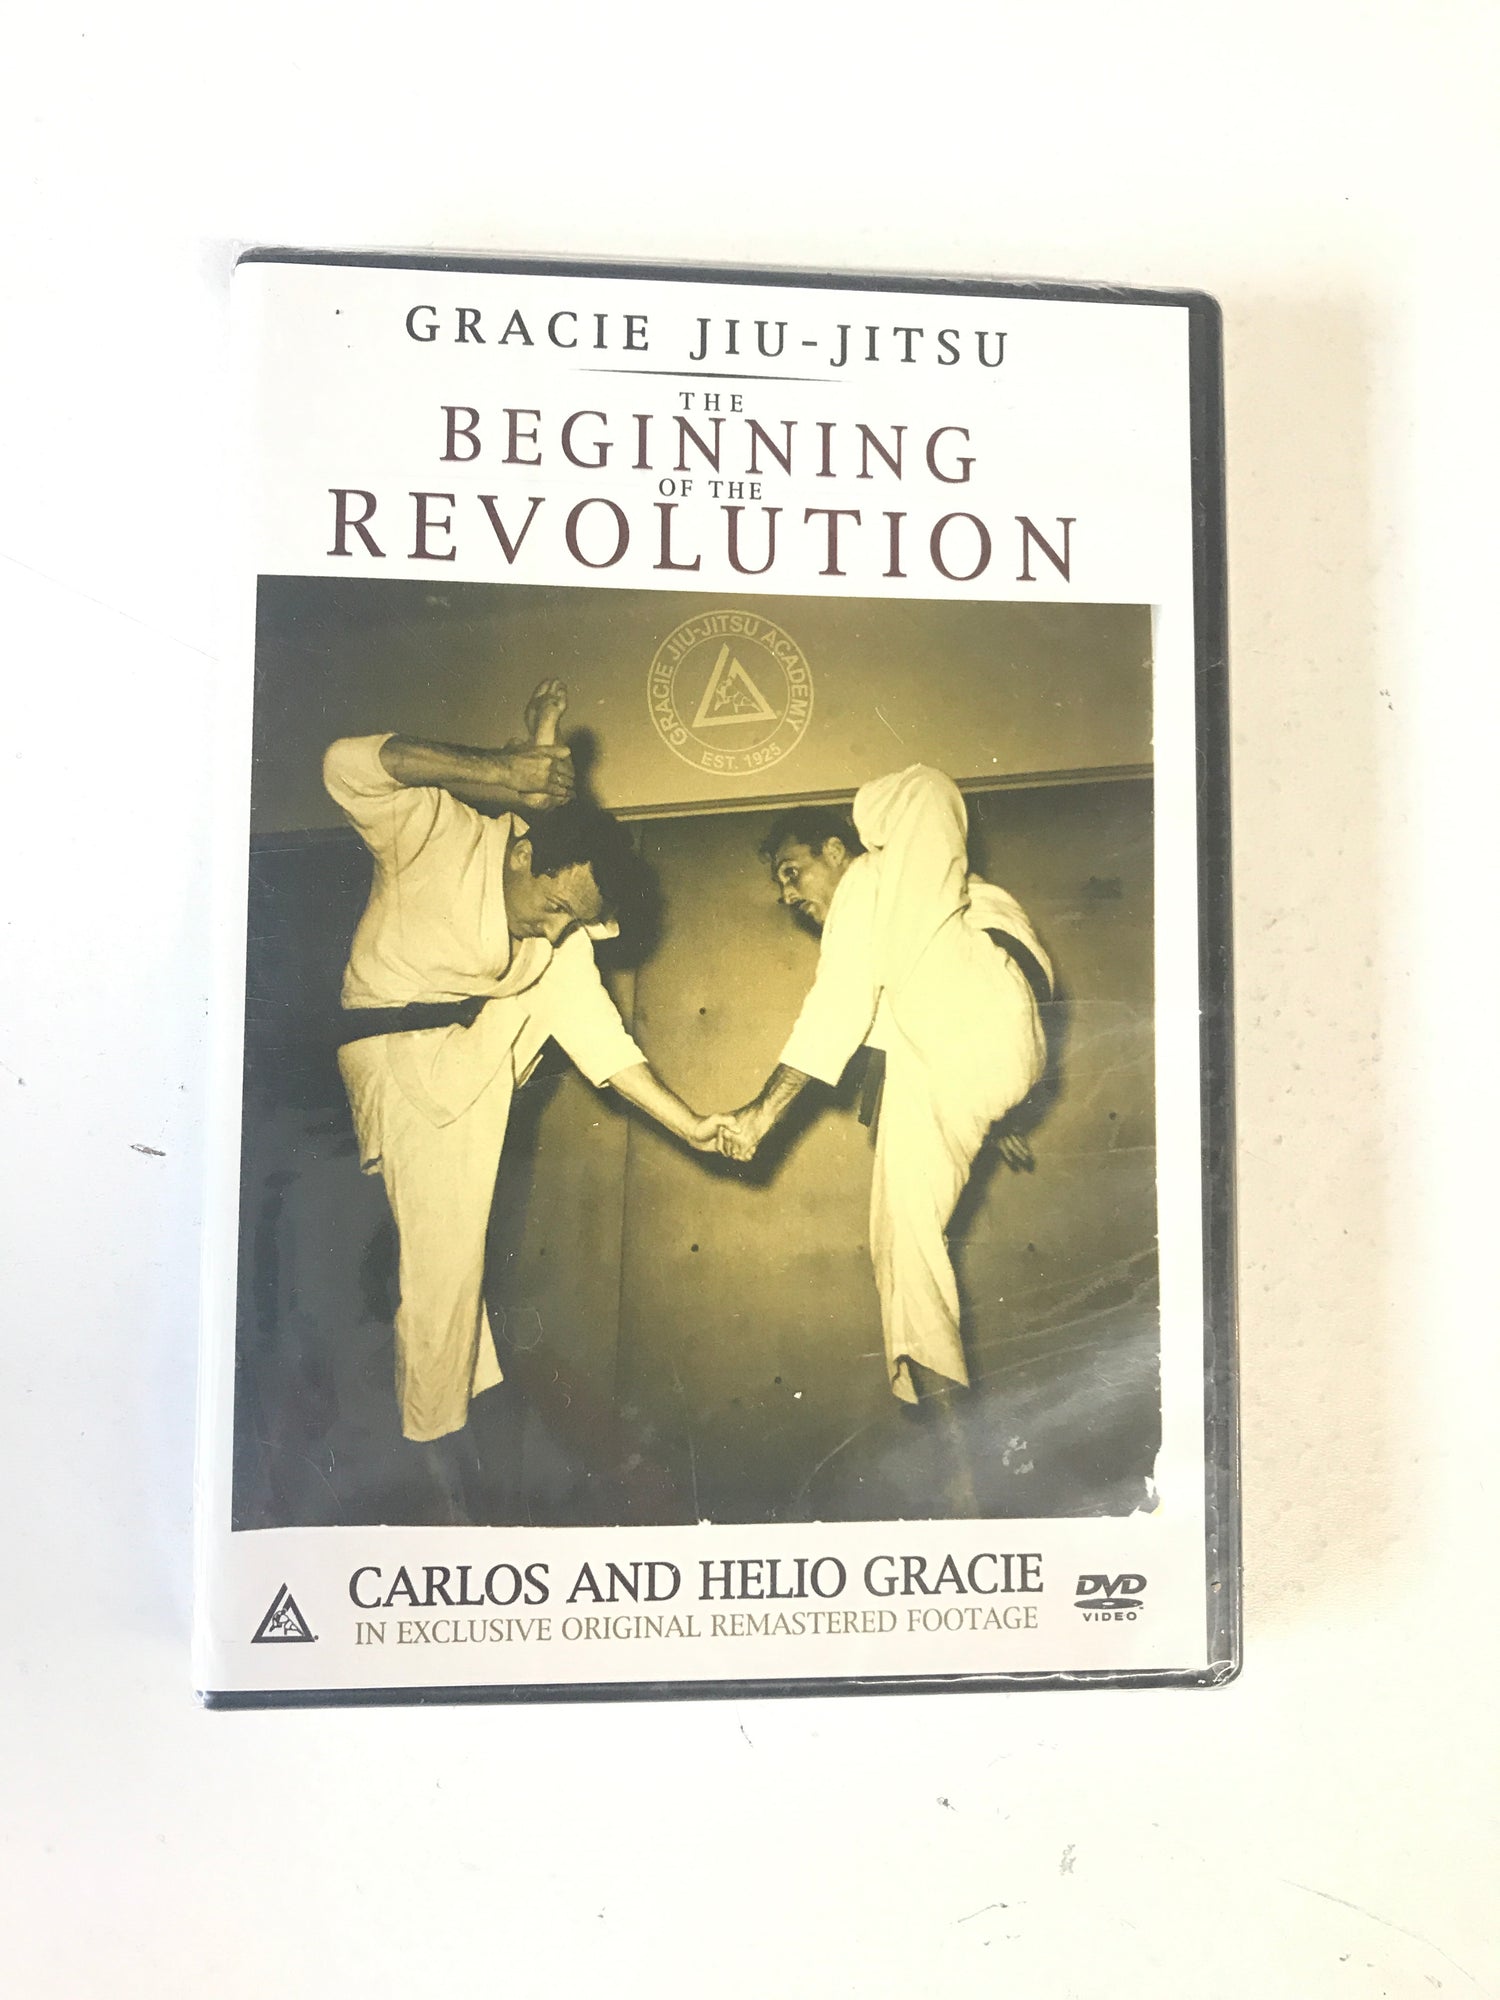 Gracie Jiu-Jitsu The Beginning of the Revolution DVD with Carlos & Helio Gracie - Budovideos